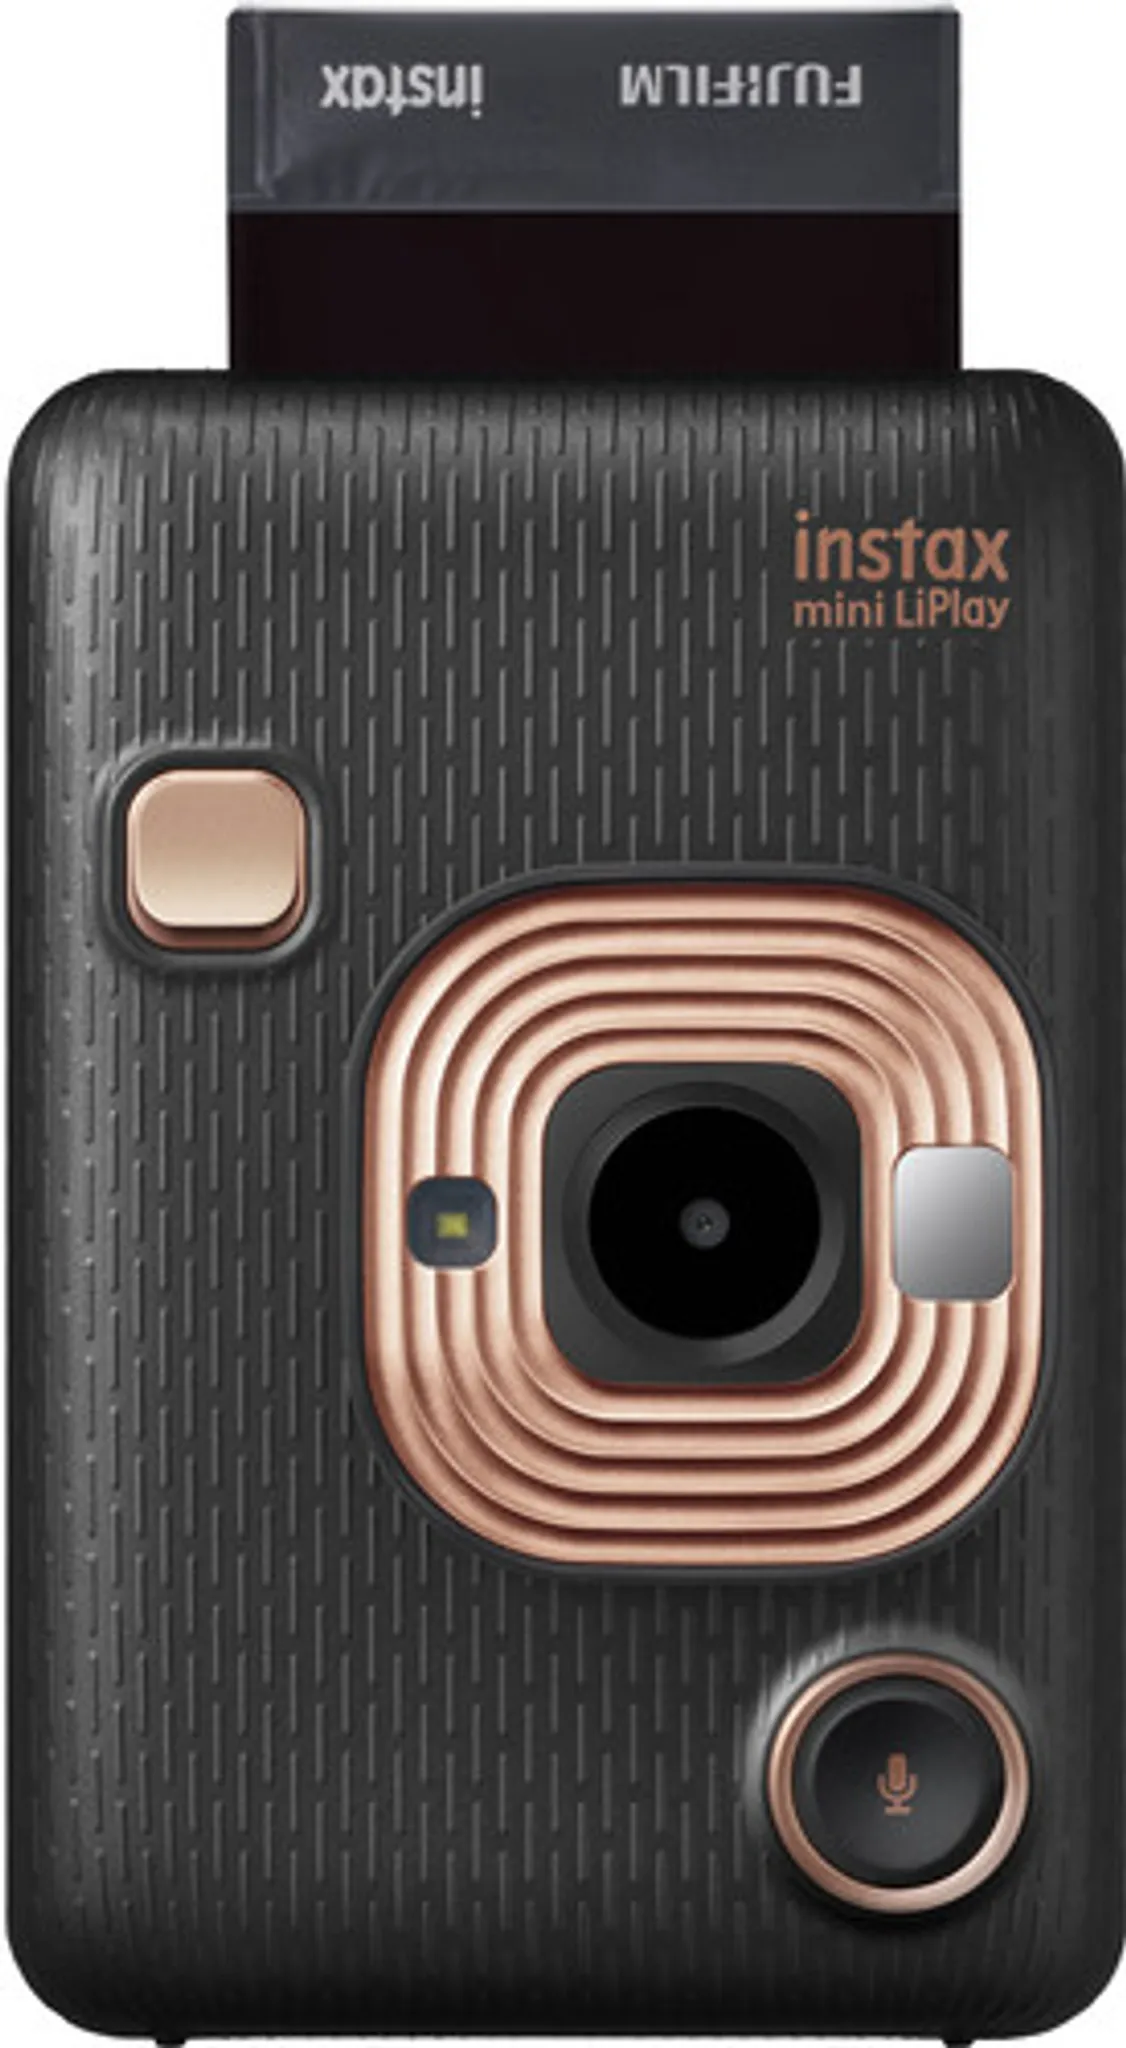 Fujifilm instax mini LiPlay elegant black | Kaufland.cz